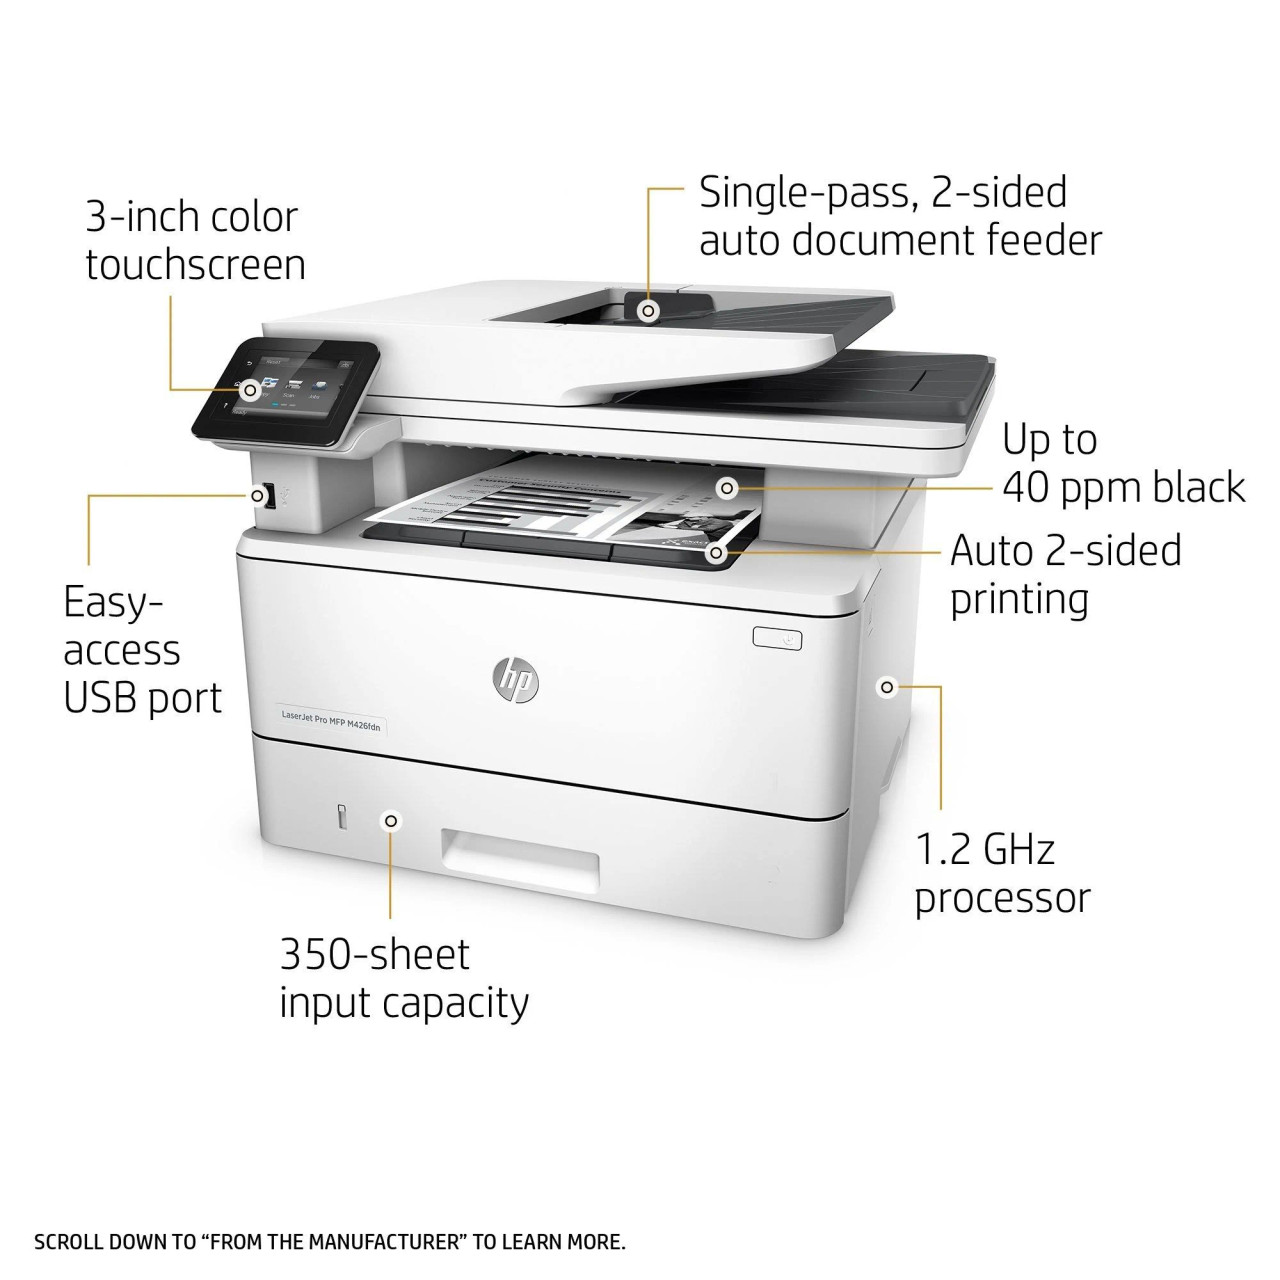 HP LaserJet Pro MFP M426fdn Printer - Refurished Buy Now! Includes Free starter toner